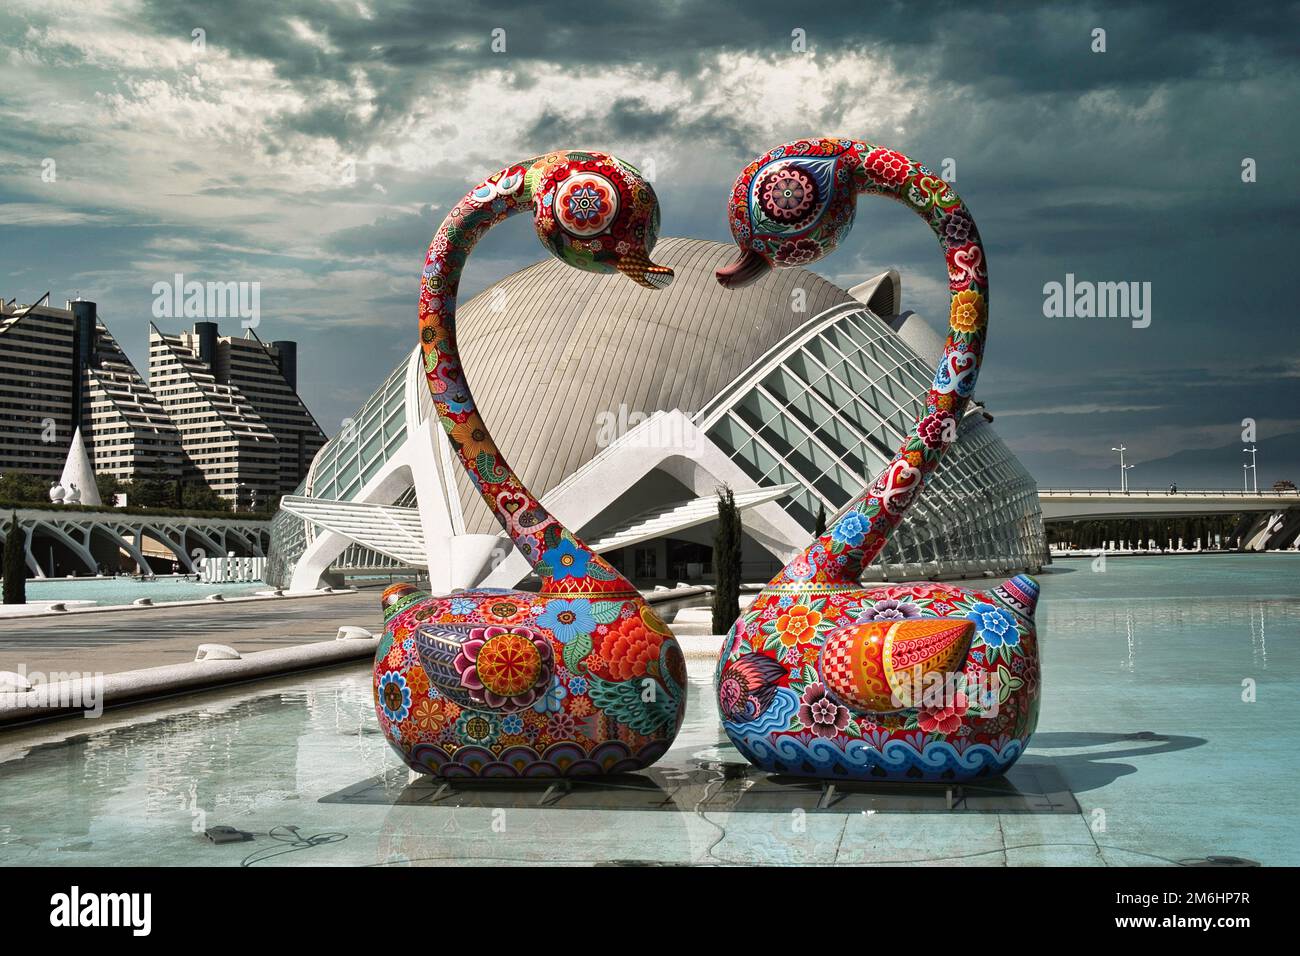 Colorful modern art in the Ciudad de les Arts in Valencia - Spain Stock Photo